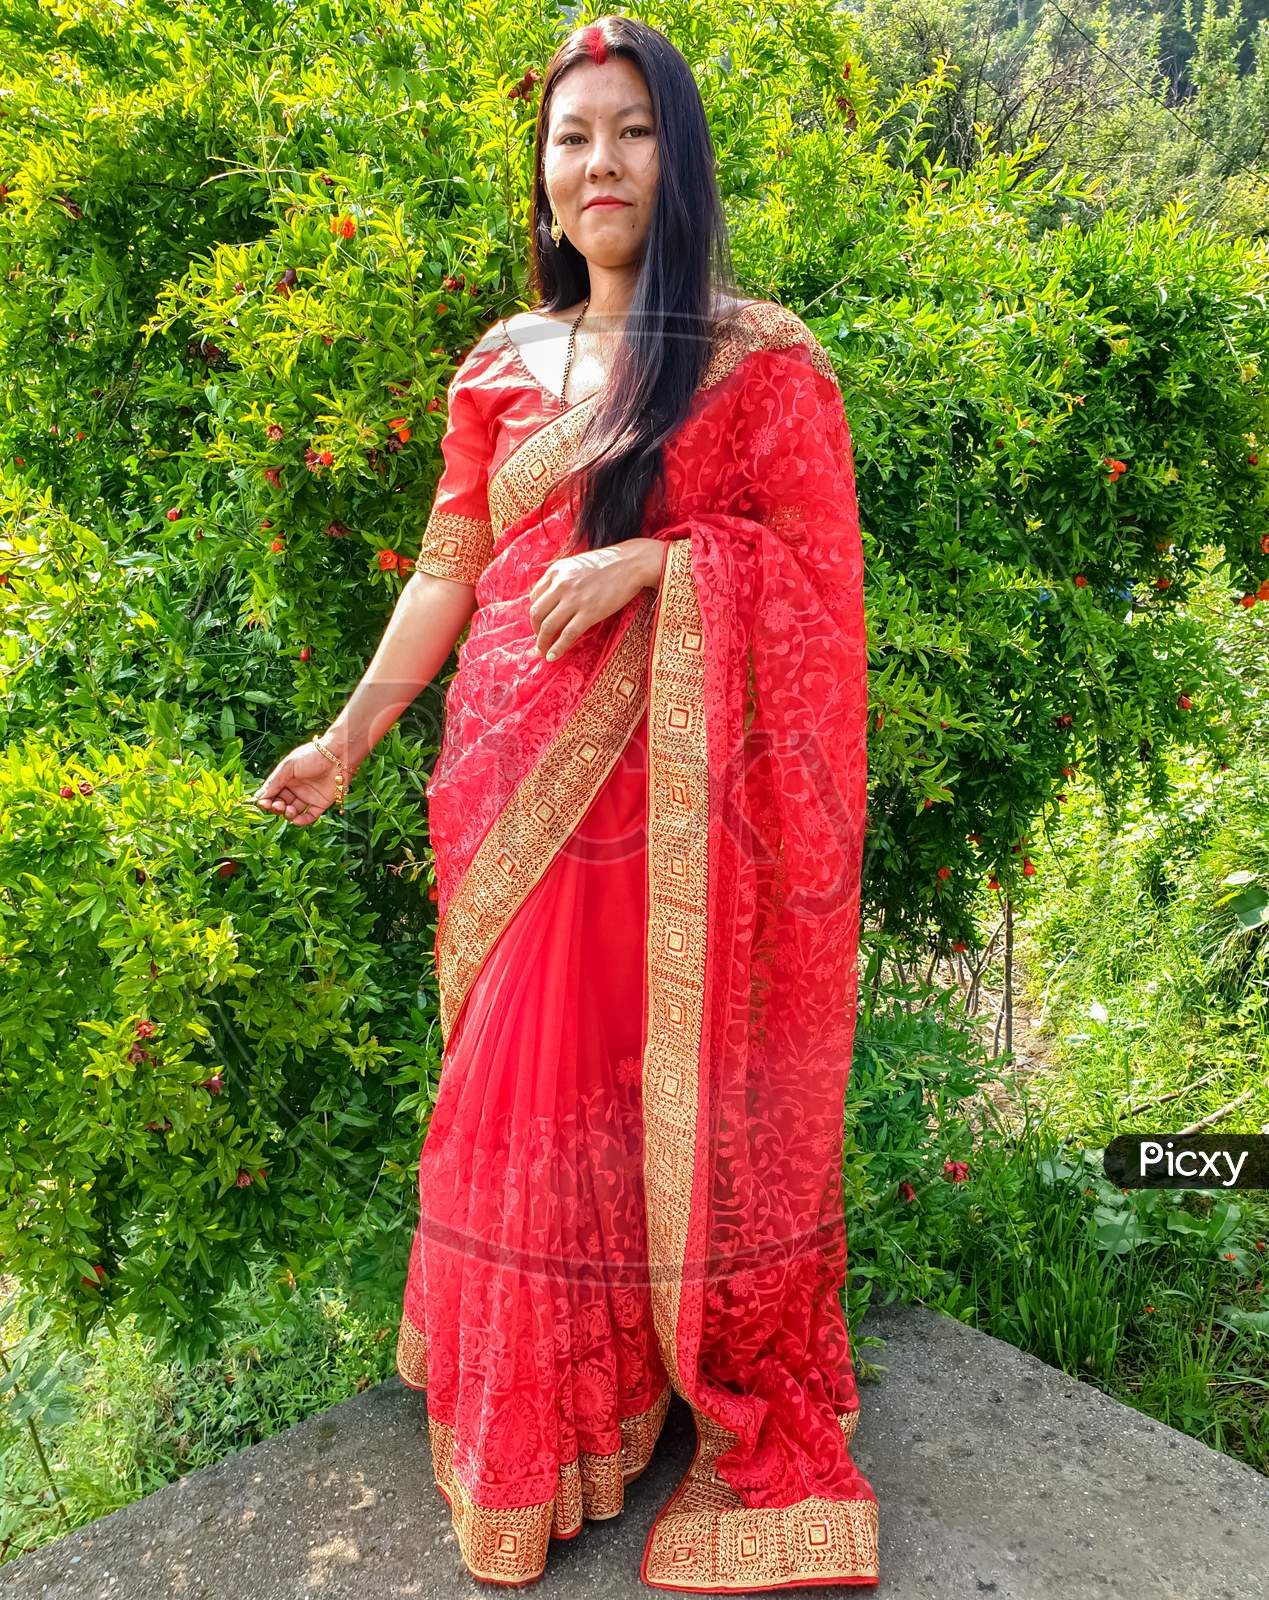 Portrait of beautiful Indian wife wearing Indian traditional dress (Saree) during coronavirus time